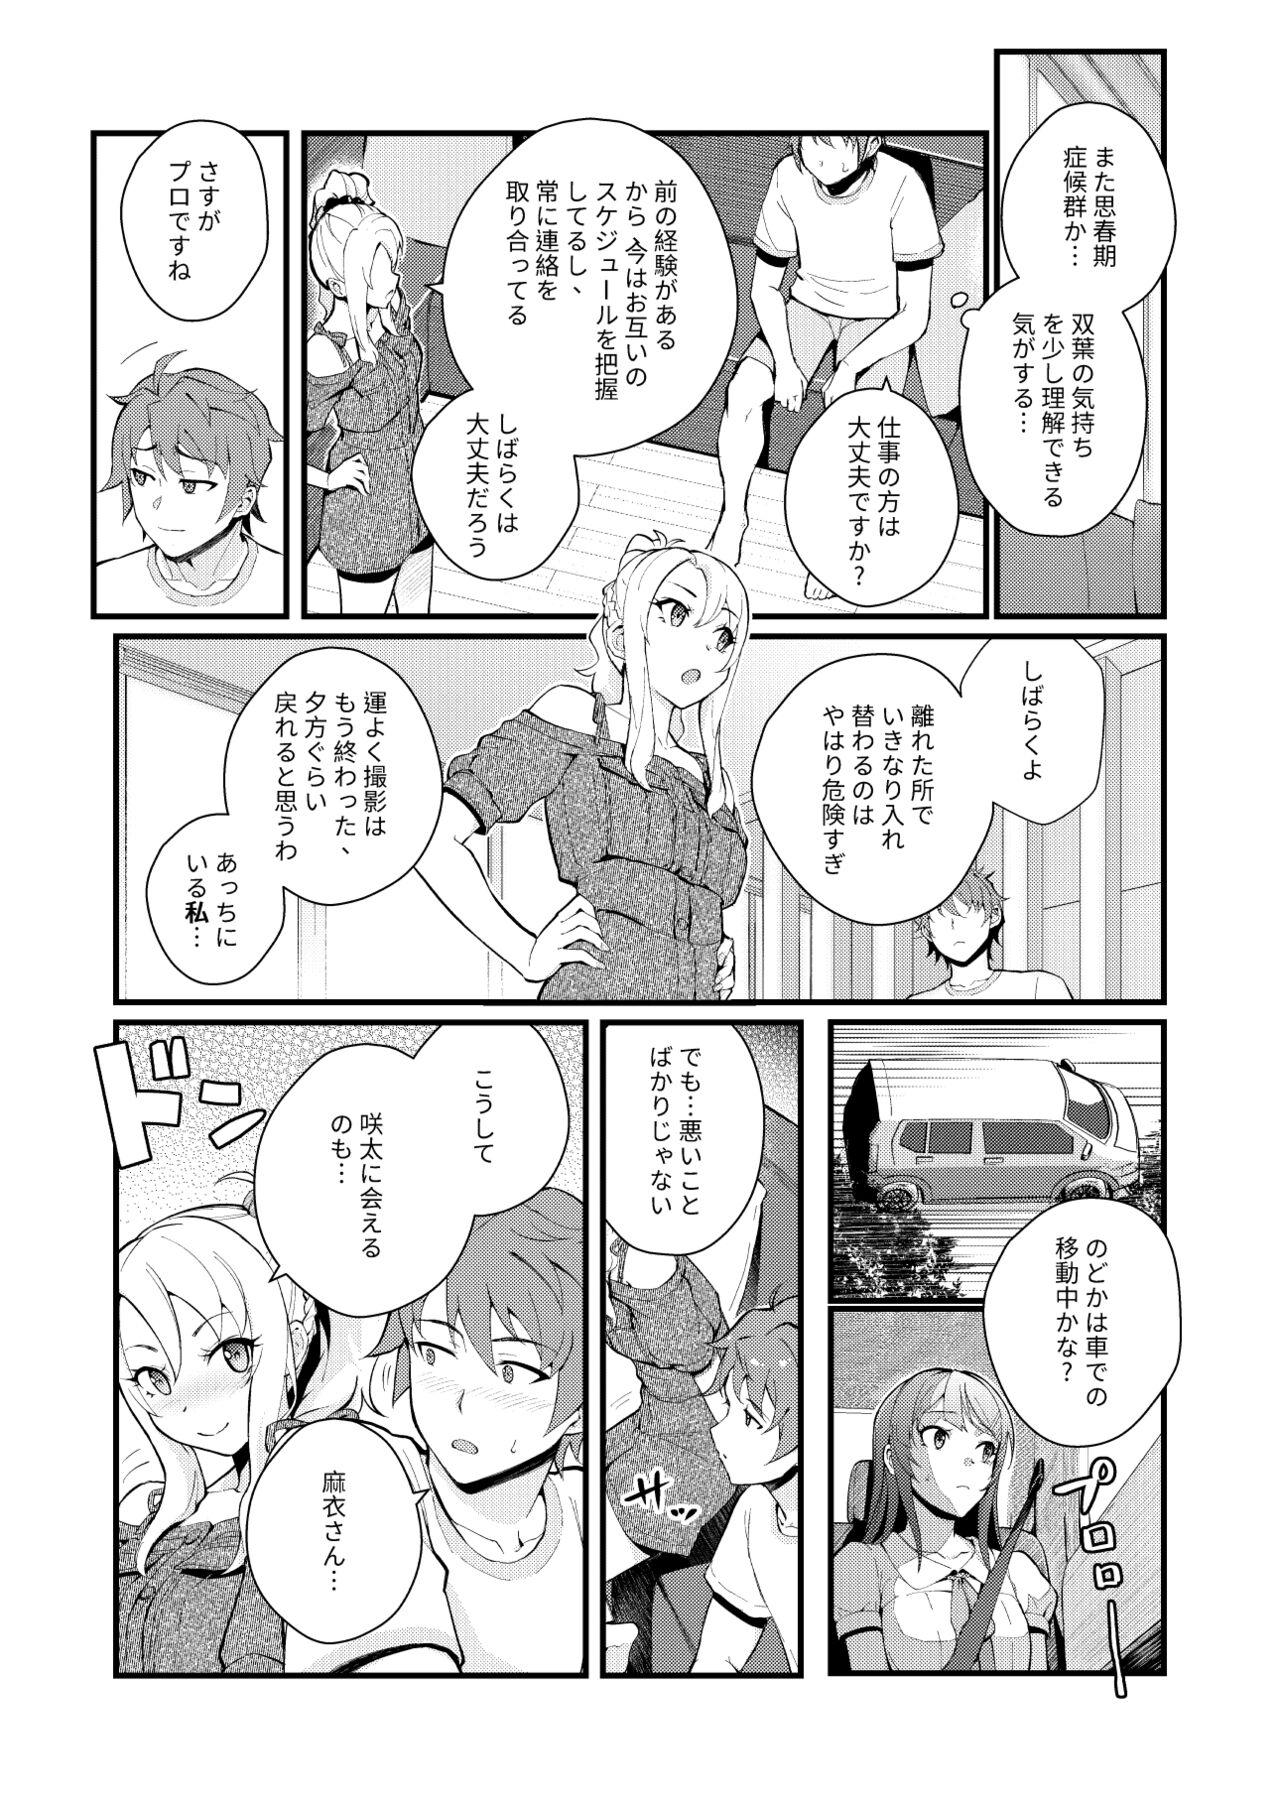 Uniform Sisters Panic - Seishun buta yarou wa bunny girl senpai no yume o minai Stepsiblings - Page 6